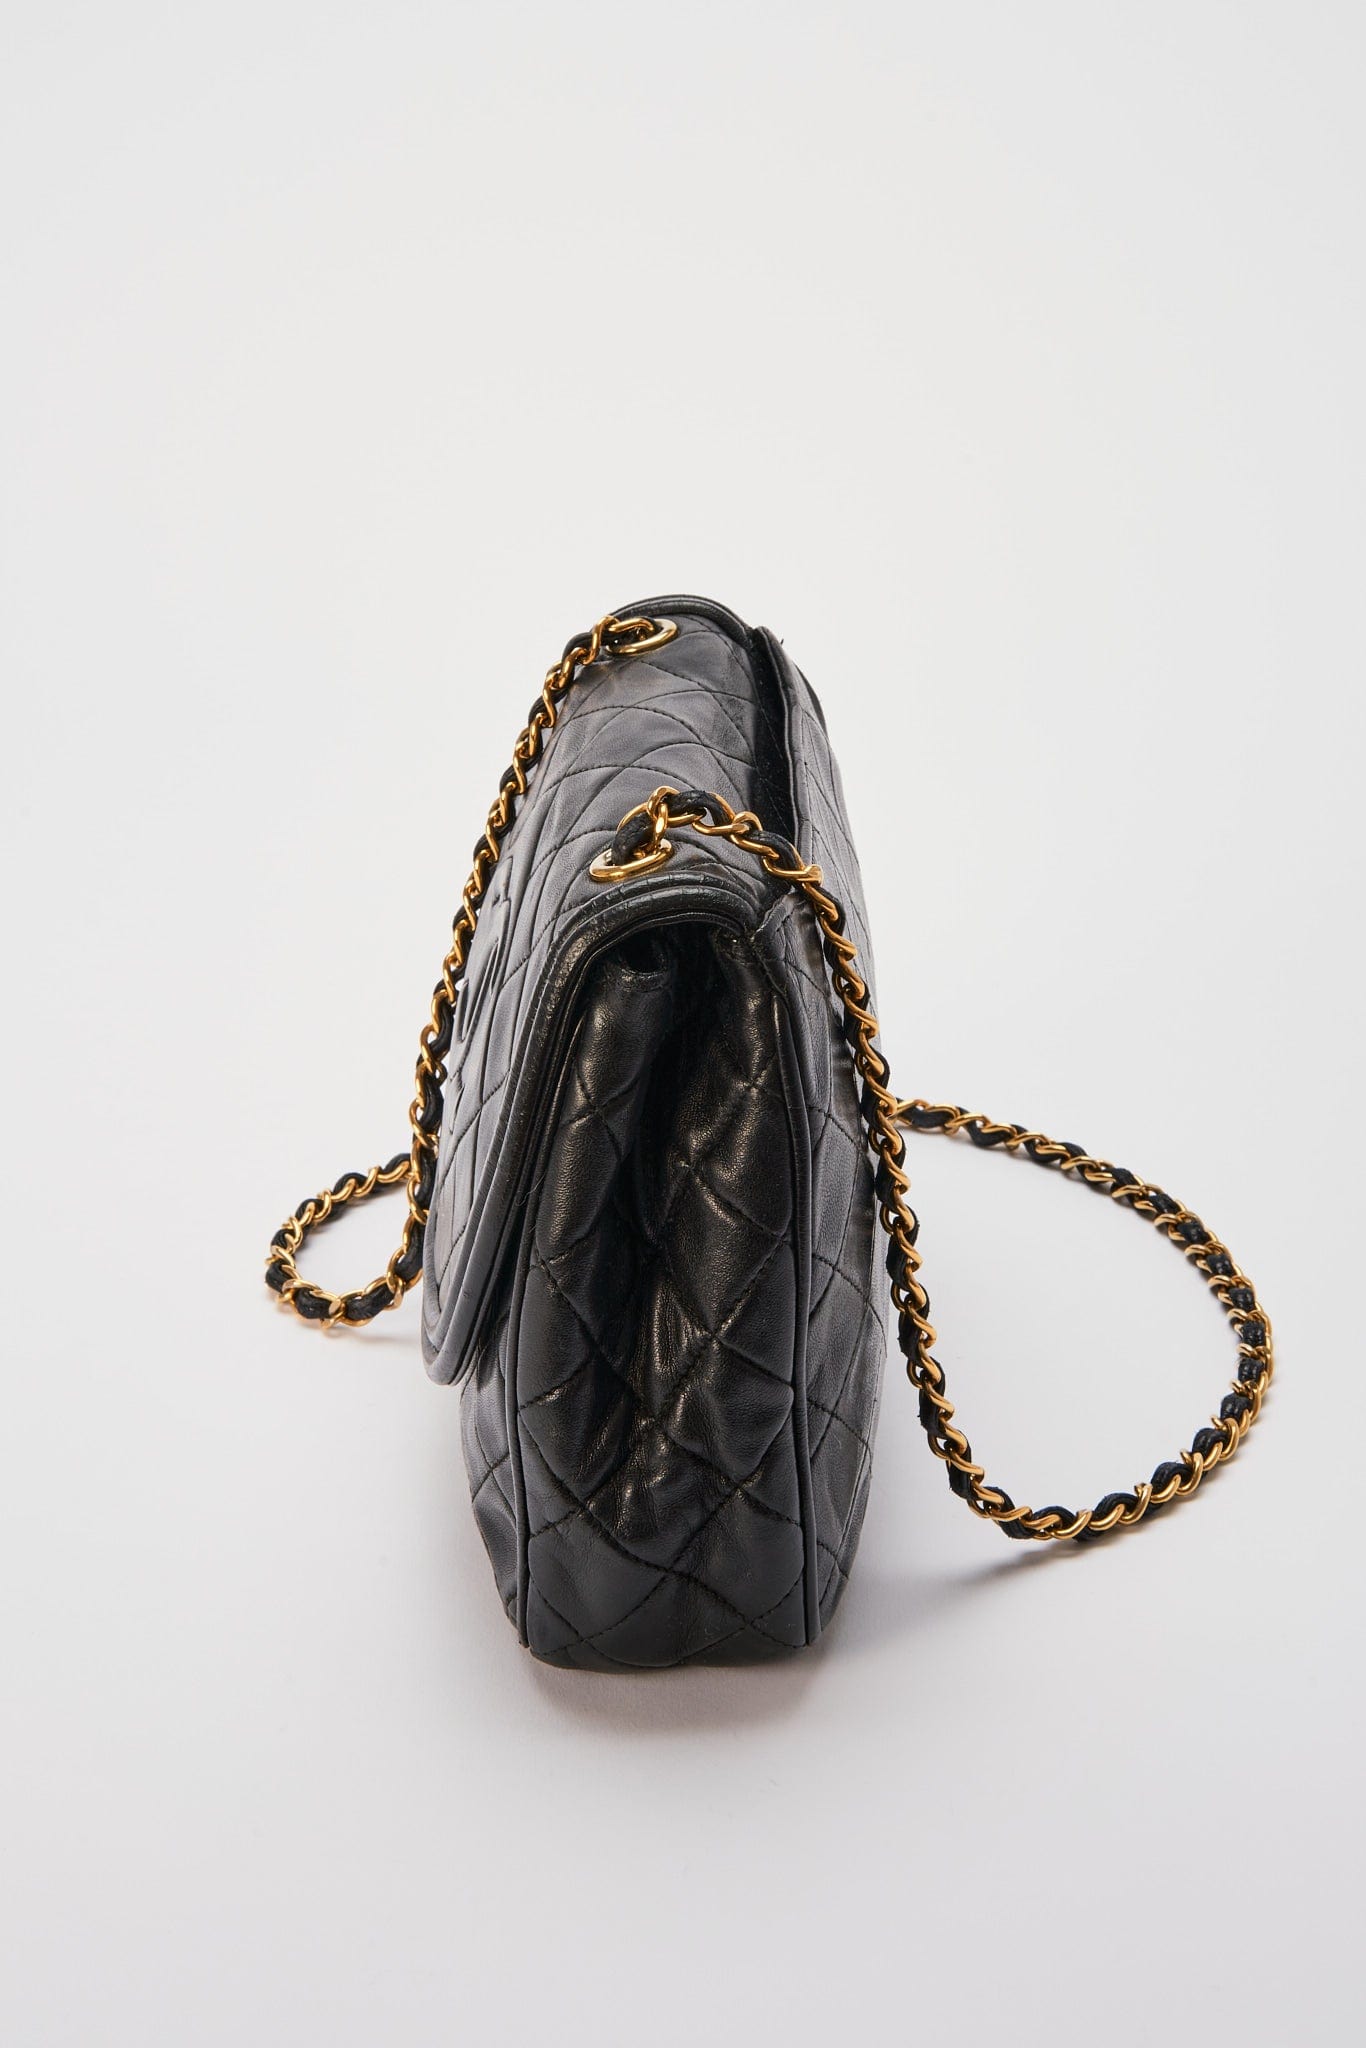 vintage chanel purse black